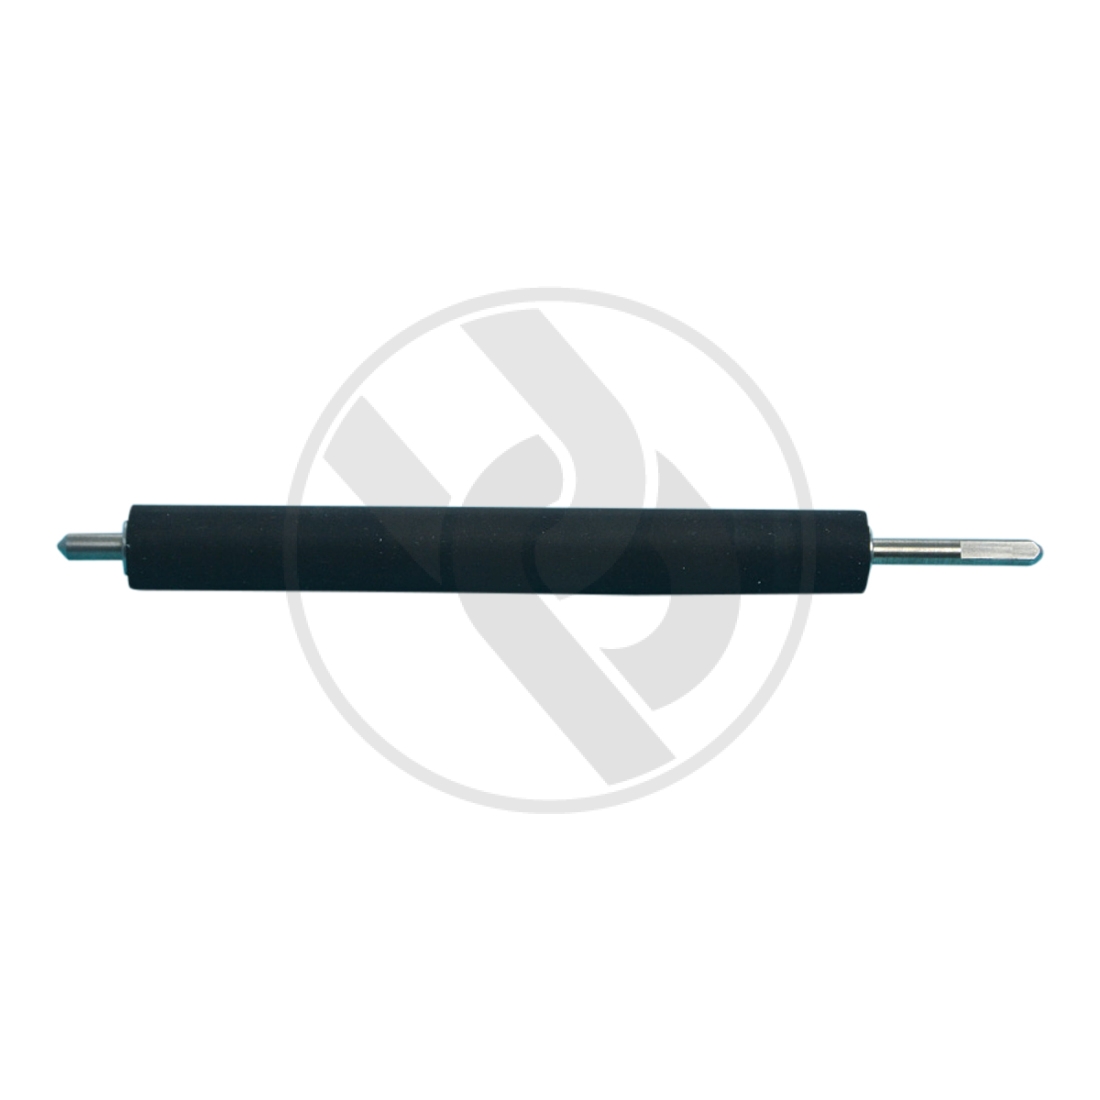 Platen roller 222/176×20 mm Silicone for Bizerba 65620218601